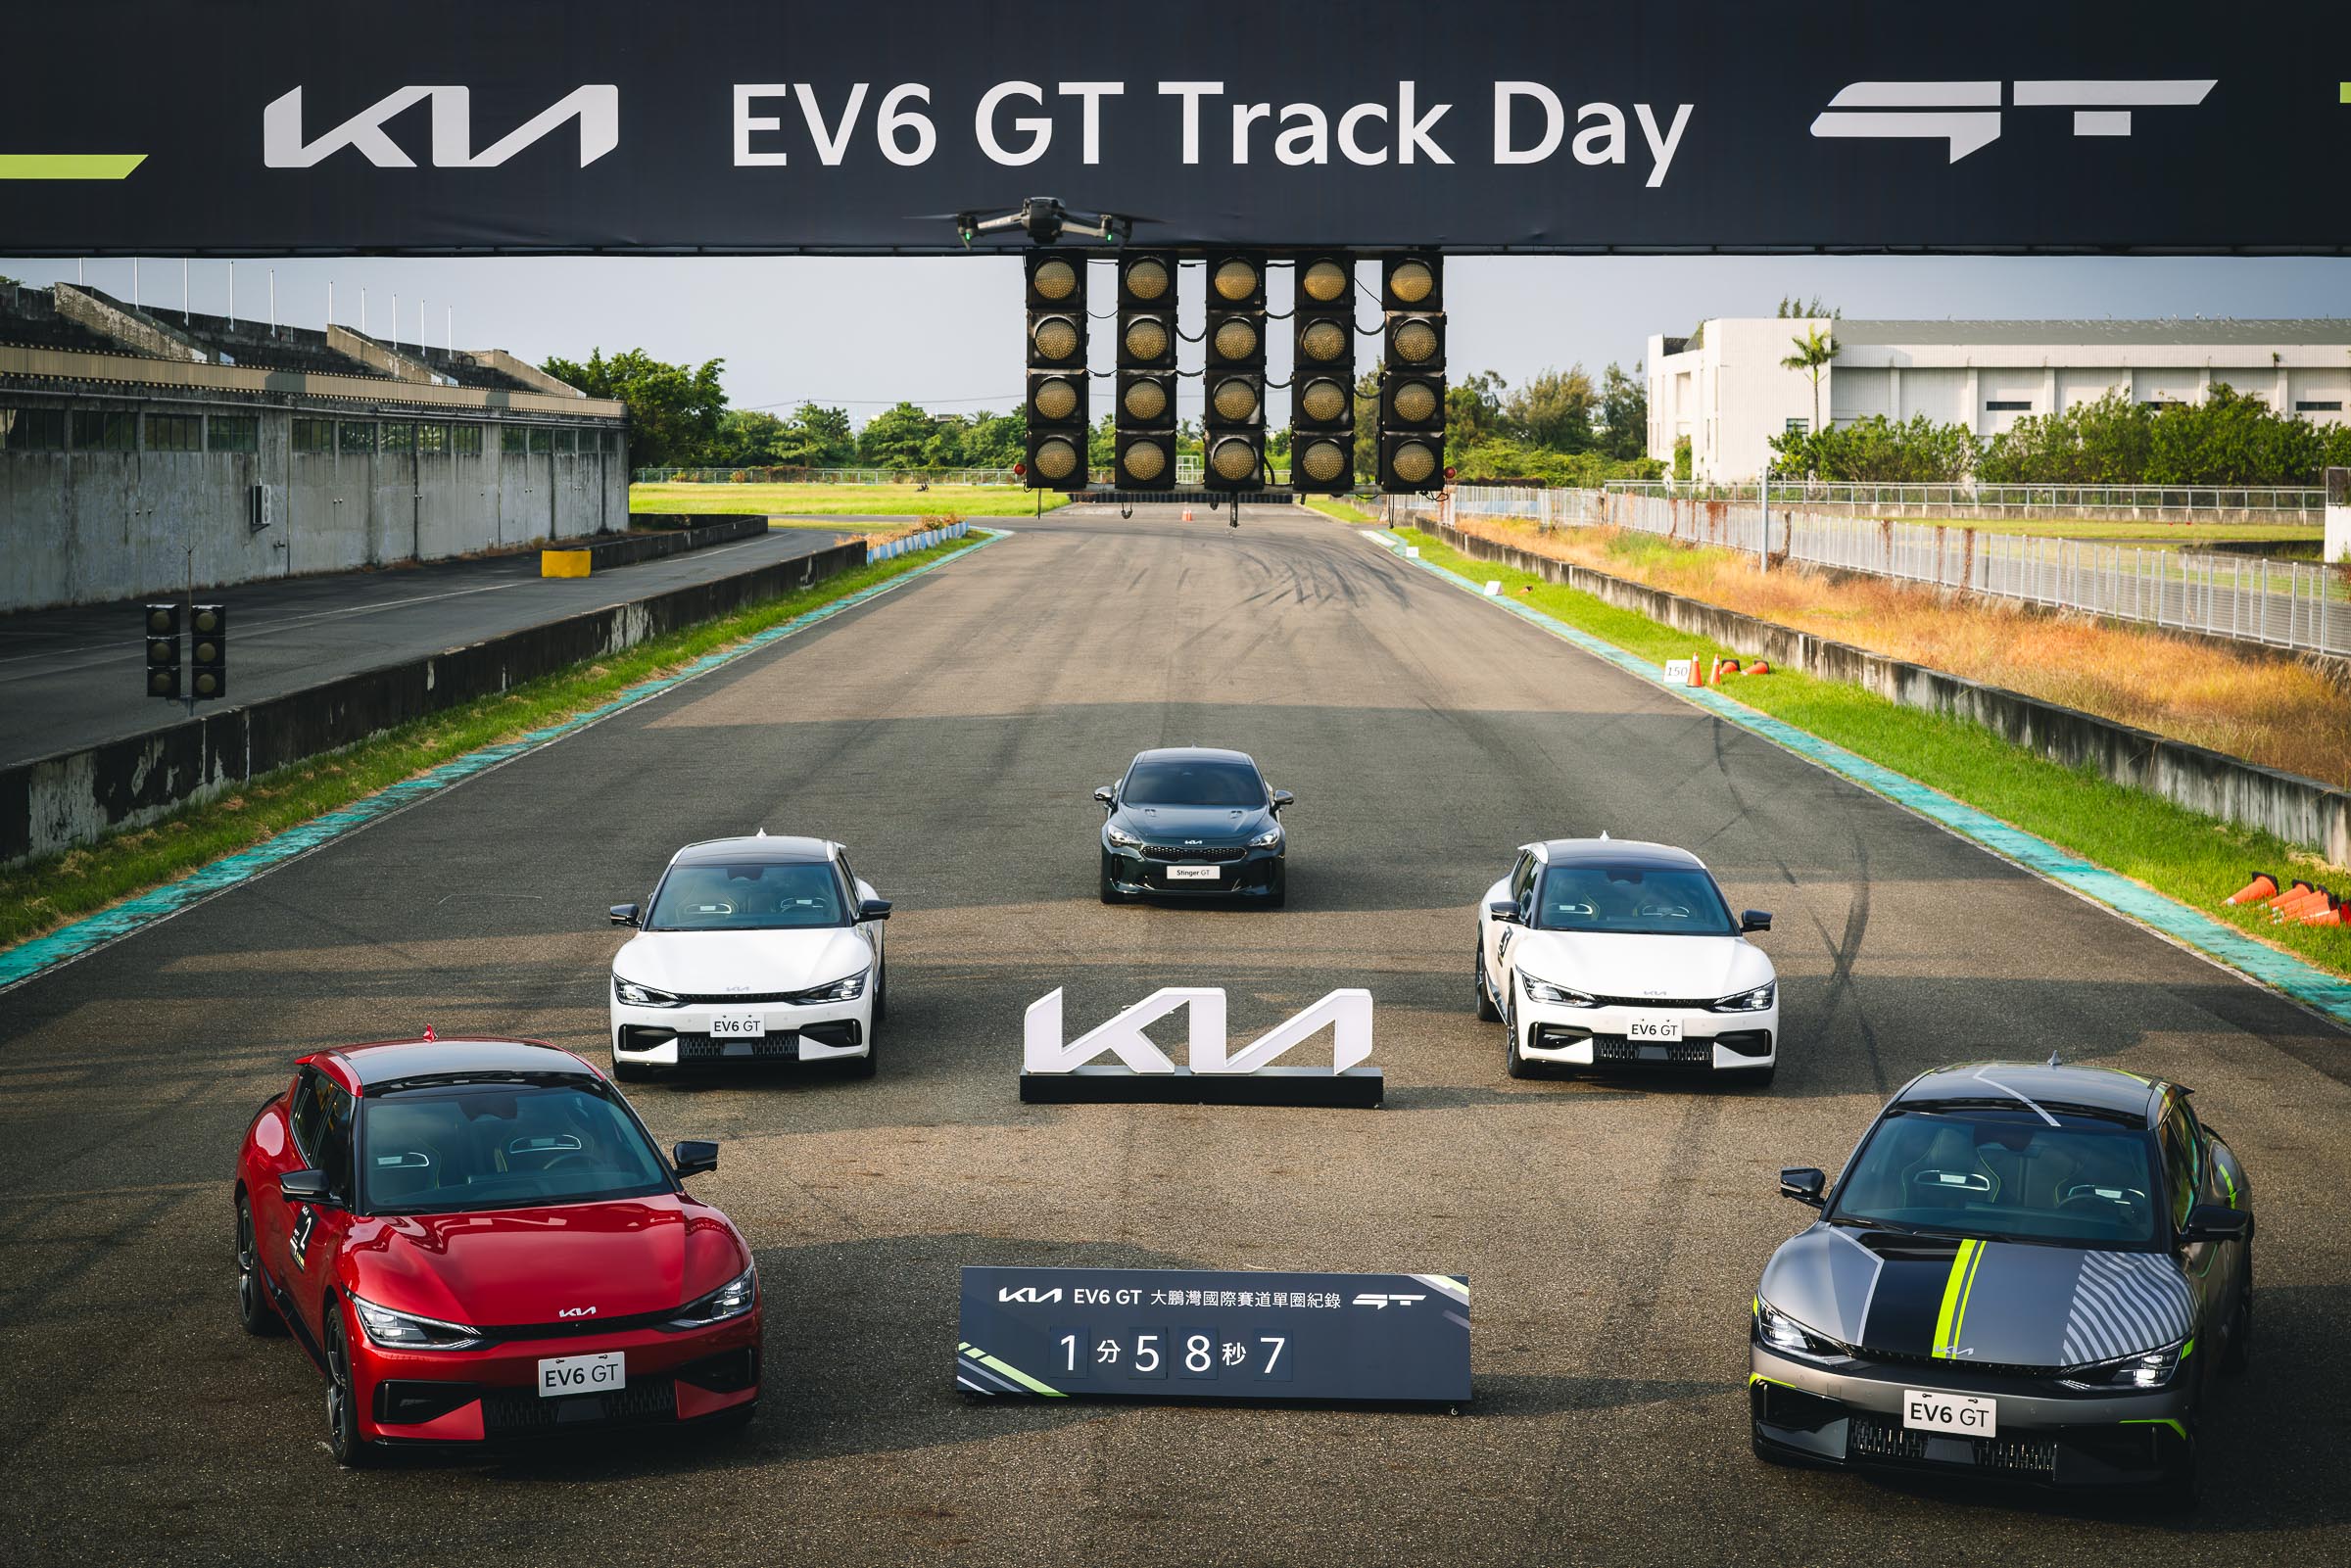 1.The Kia EV6 GT純電性能跑旅榮獲2023 WCOTY (World Car Of The Year)世界風雲車年度性能車大獎，近日更創下大鵬灣國際賽道單圈紀錄1分58秒7。